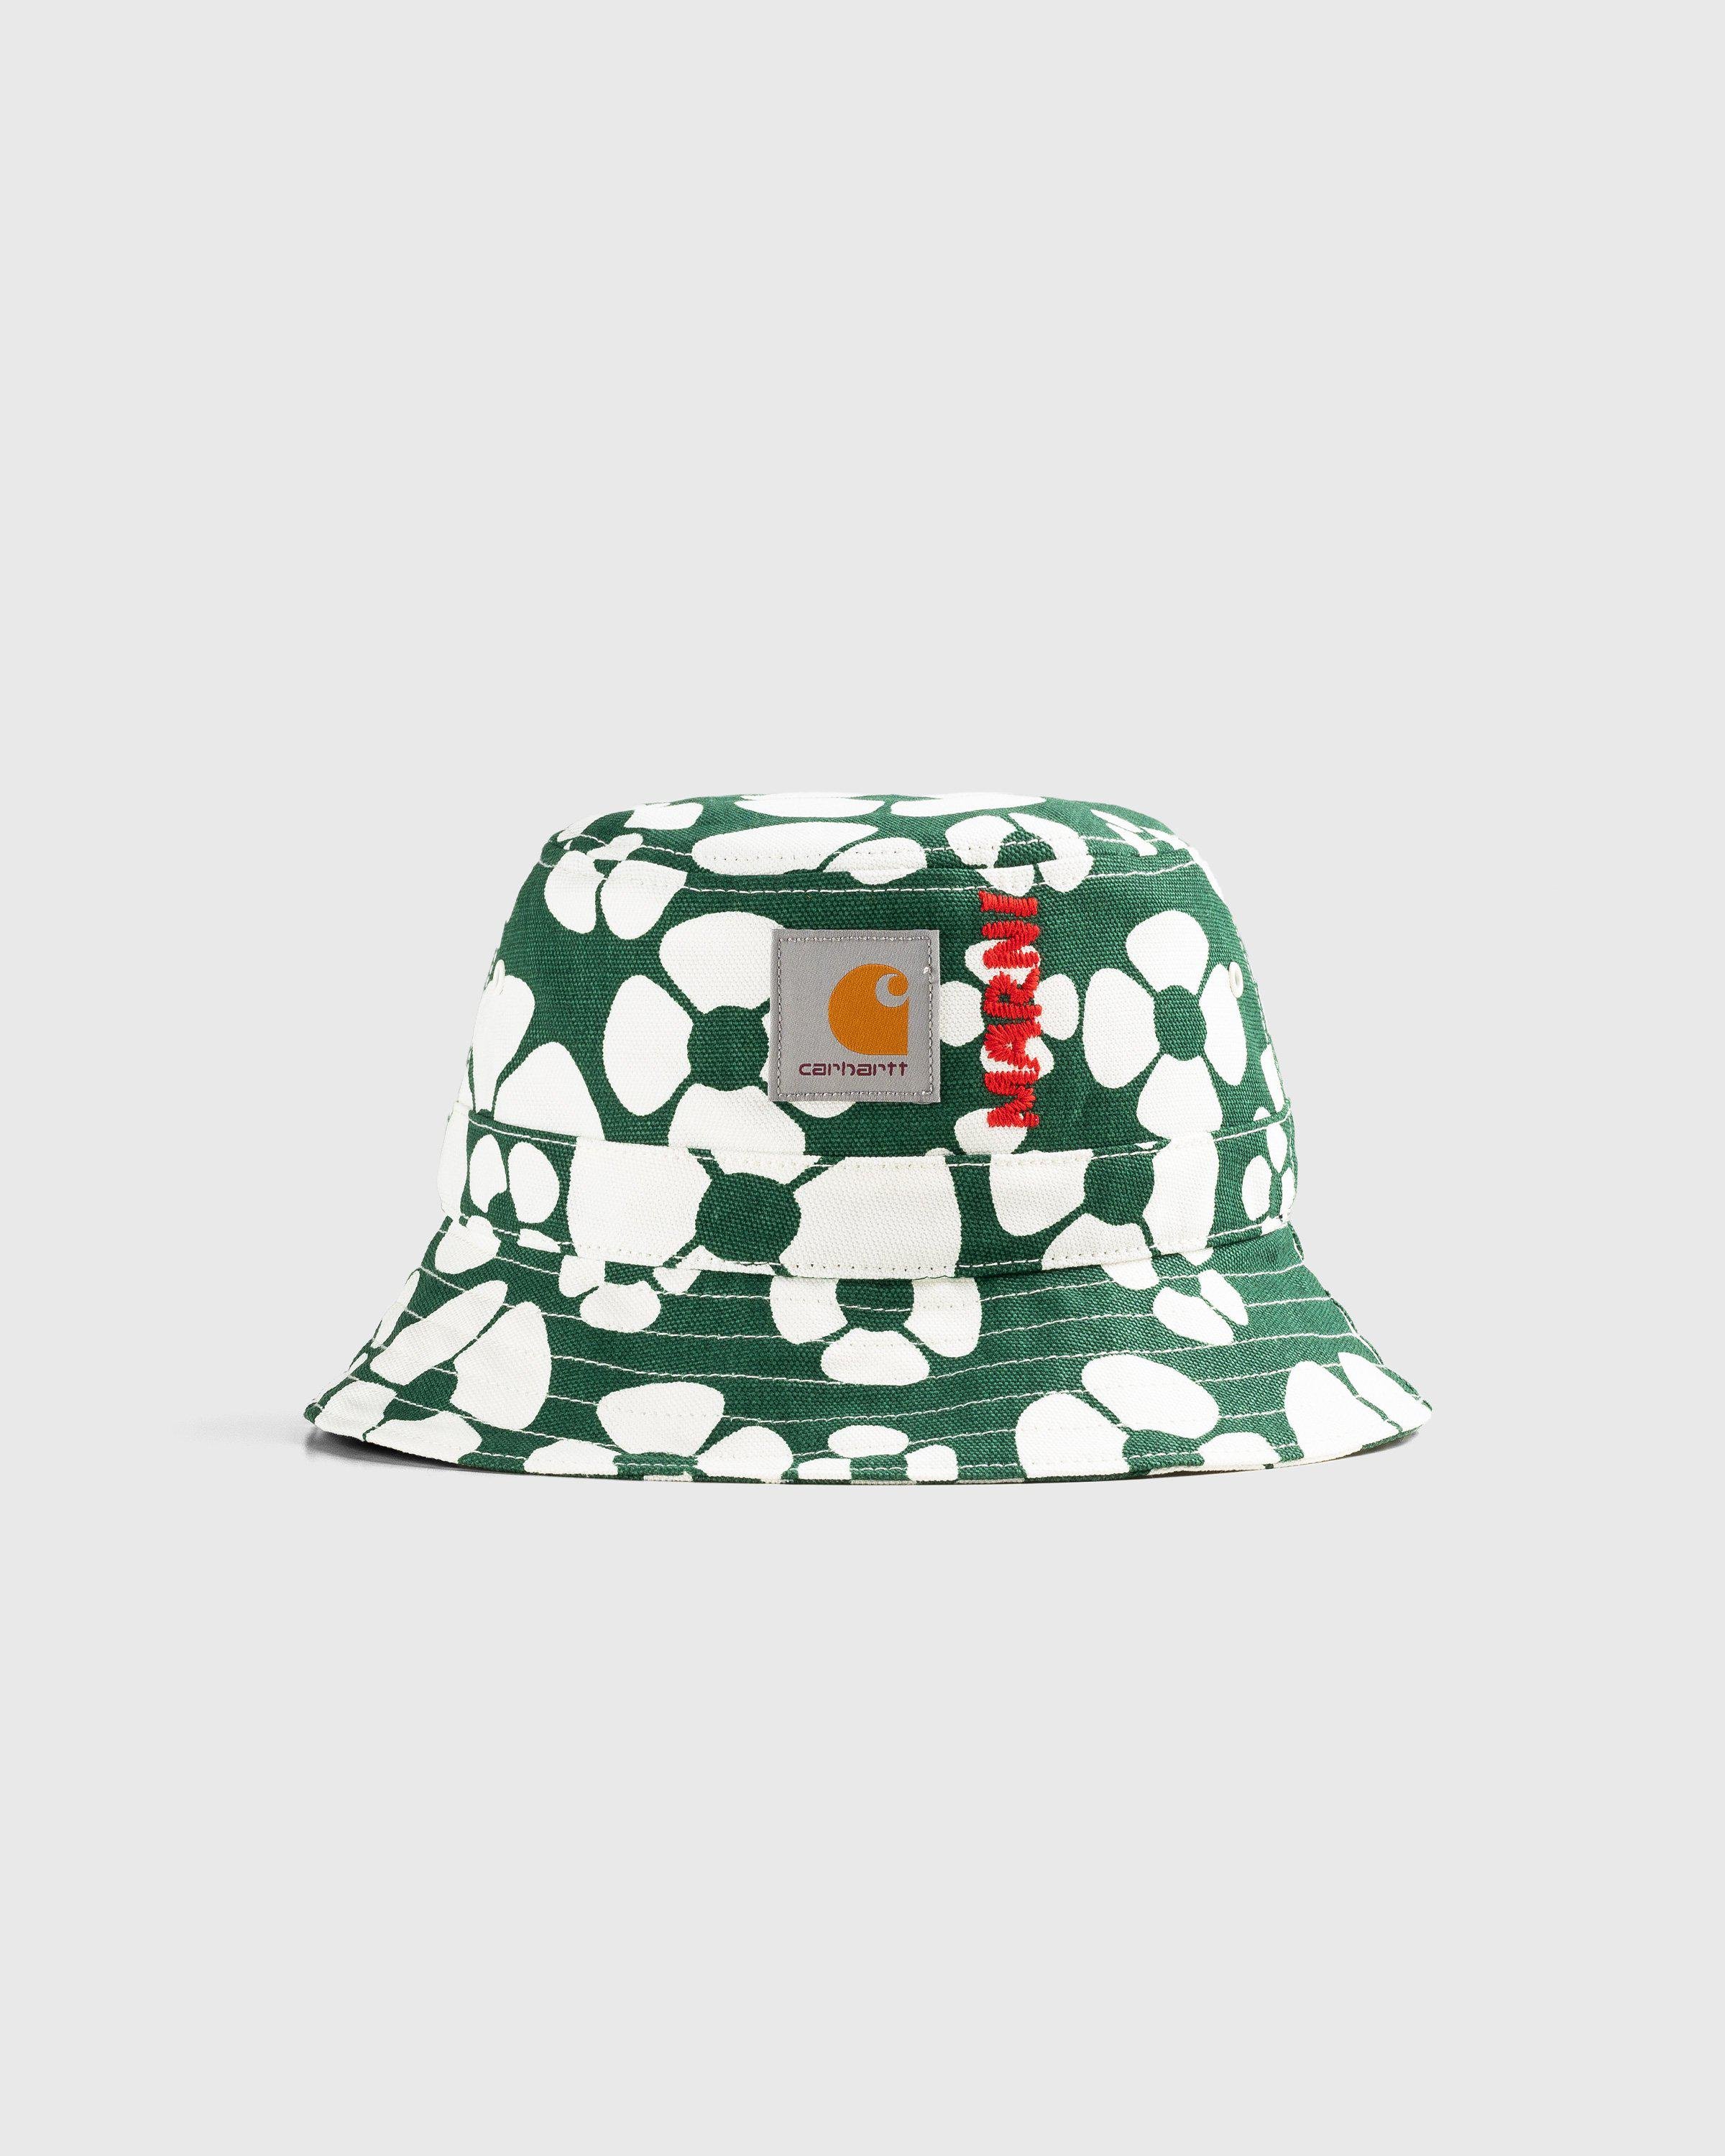 Marni x Carhartt WIPFloral Bucket Hat Green by HIGHSNOBIETY